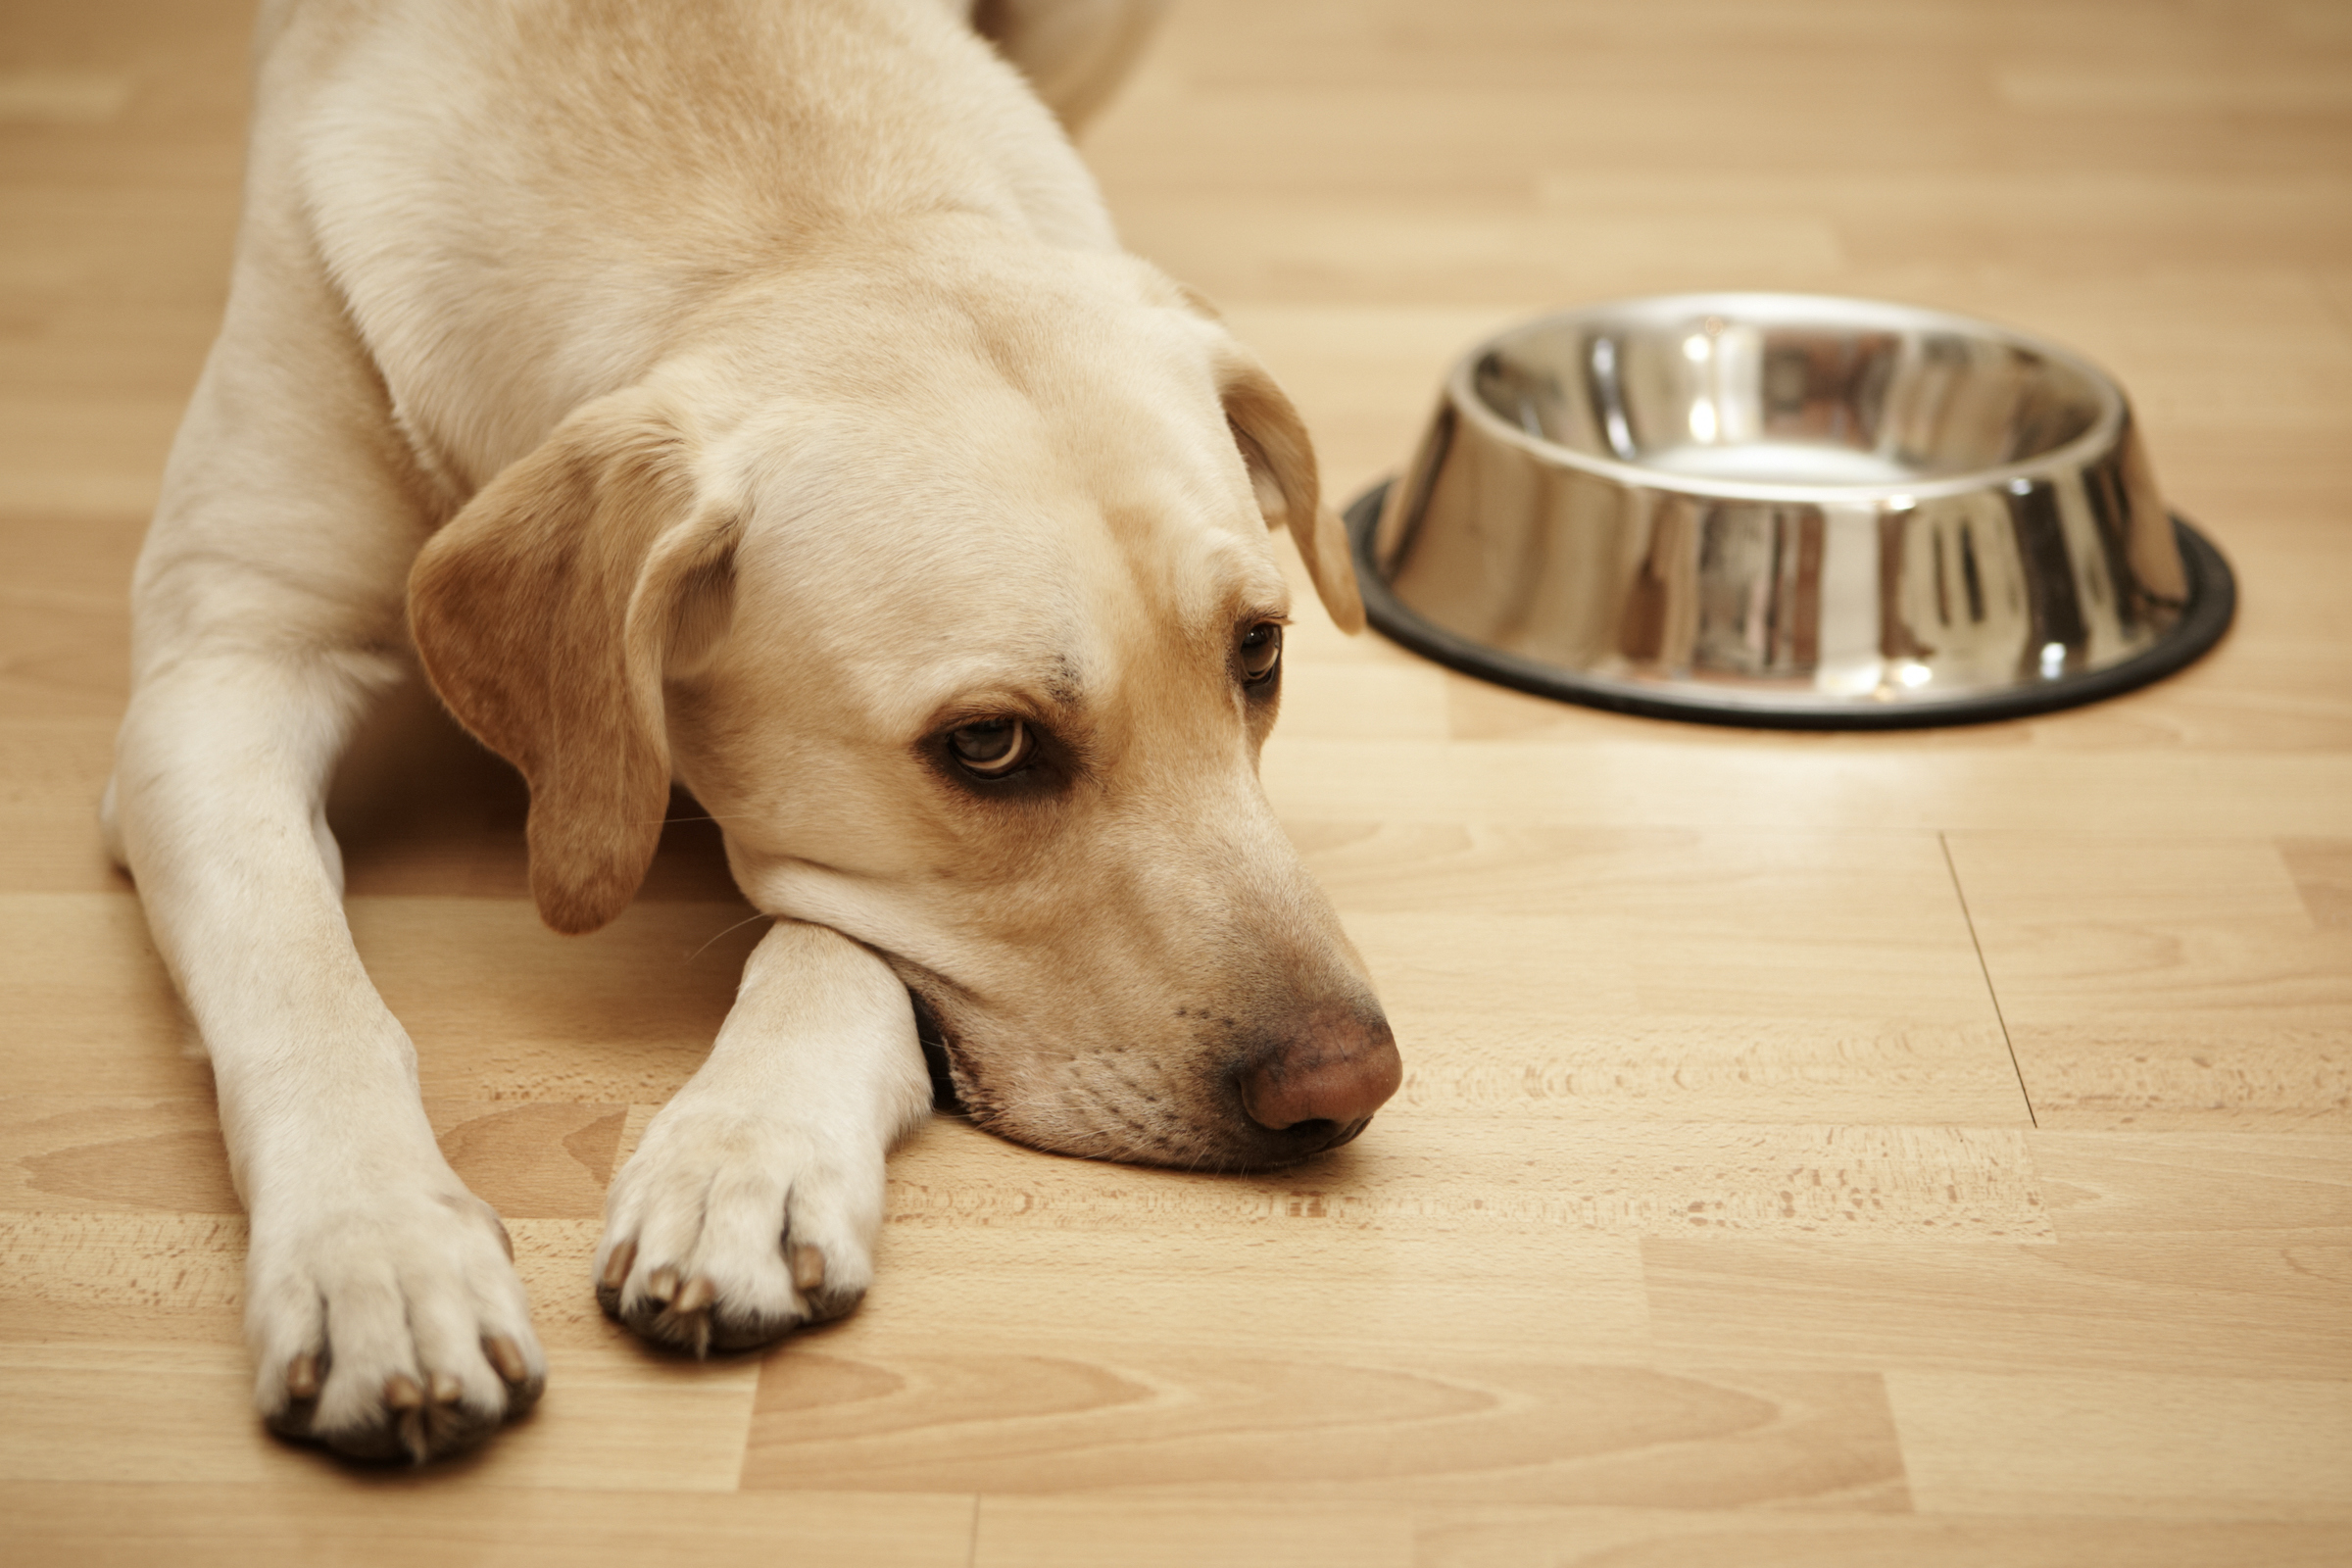 A Labrador Retriever lies on the wooden floor next to a food bowl